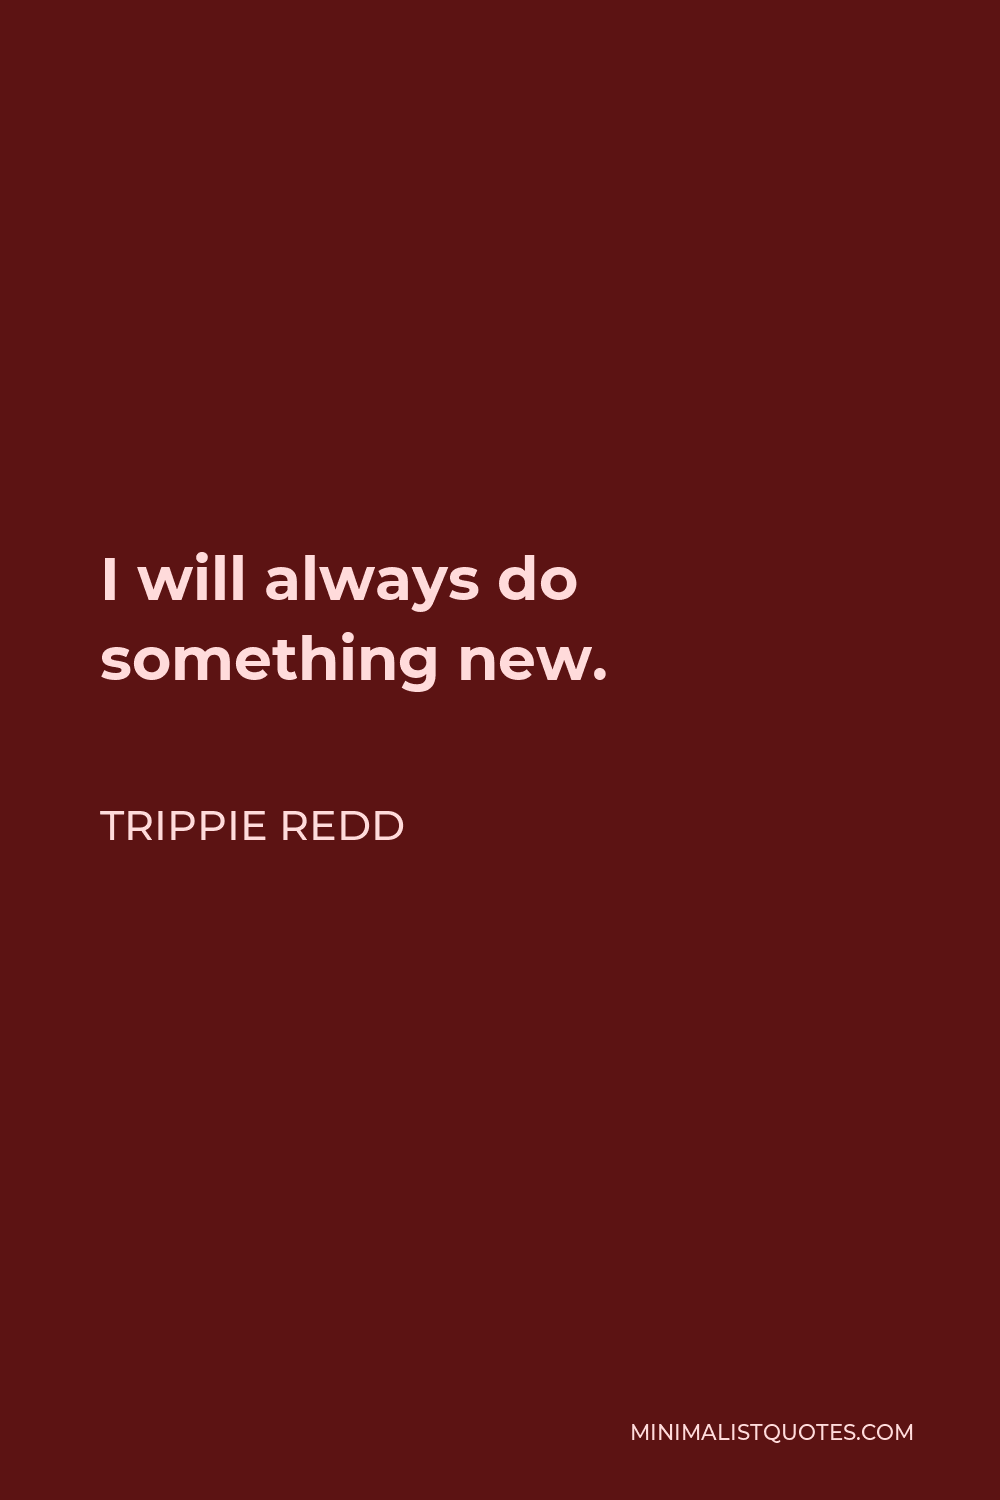 Trippie Redd Quote - I will always do something new.